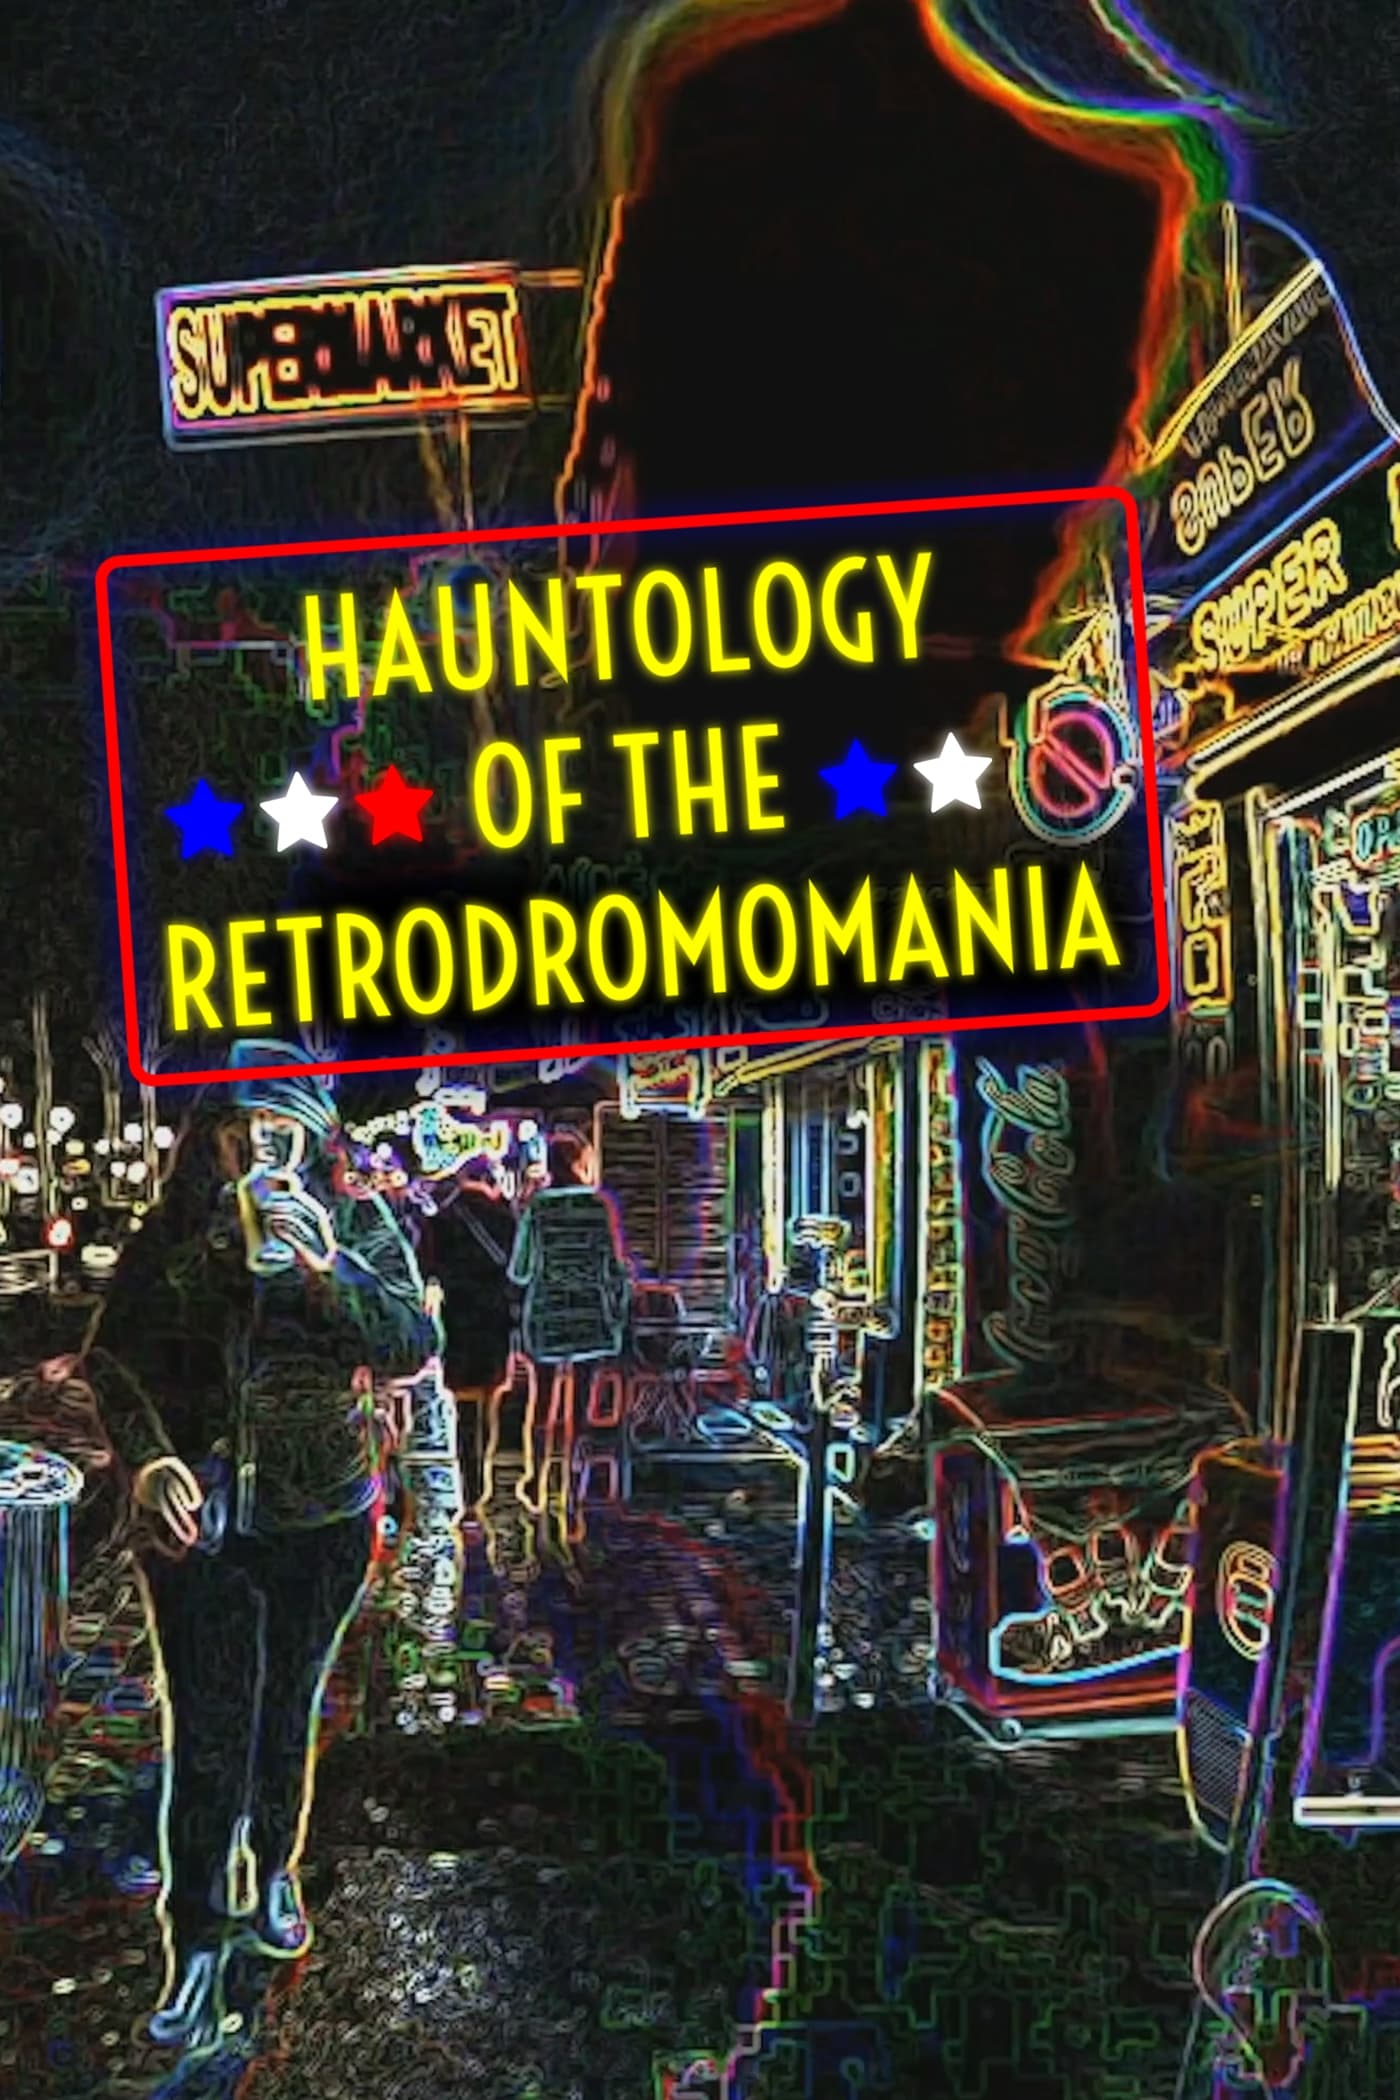 Hauntology of the Retrodromomania